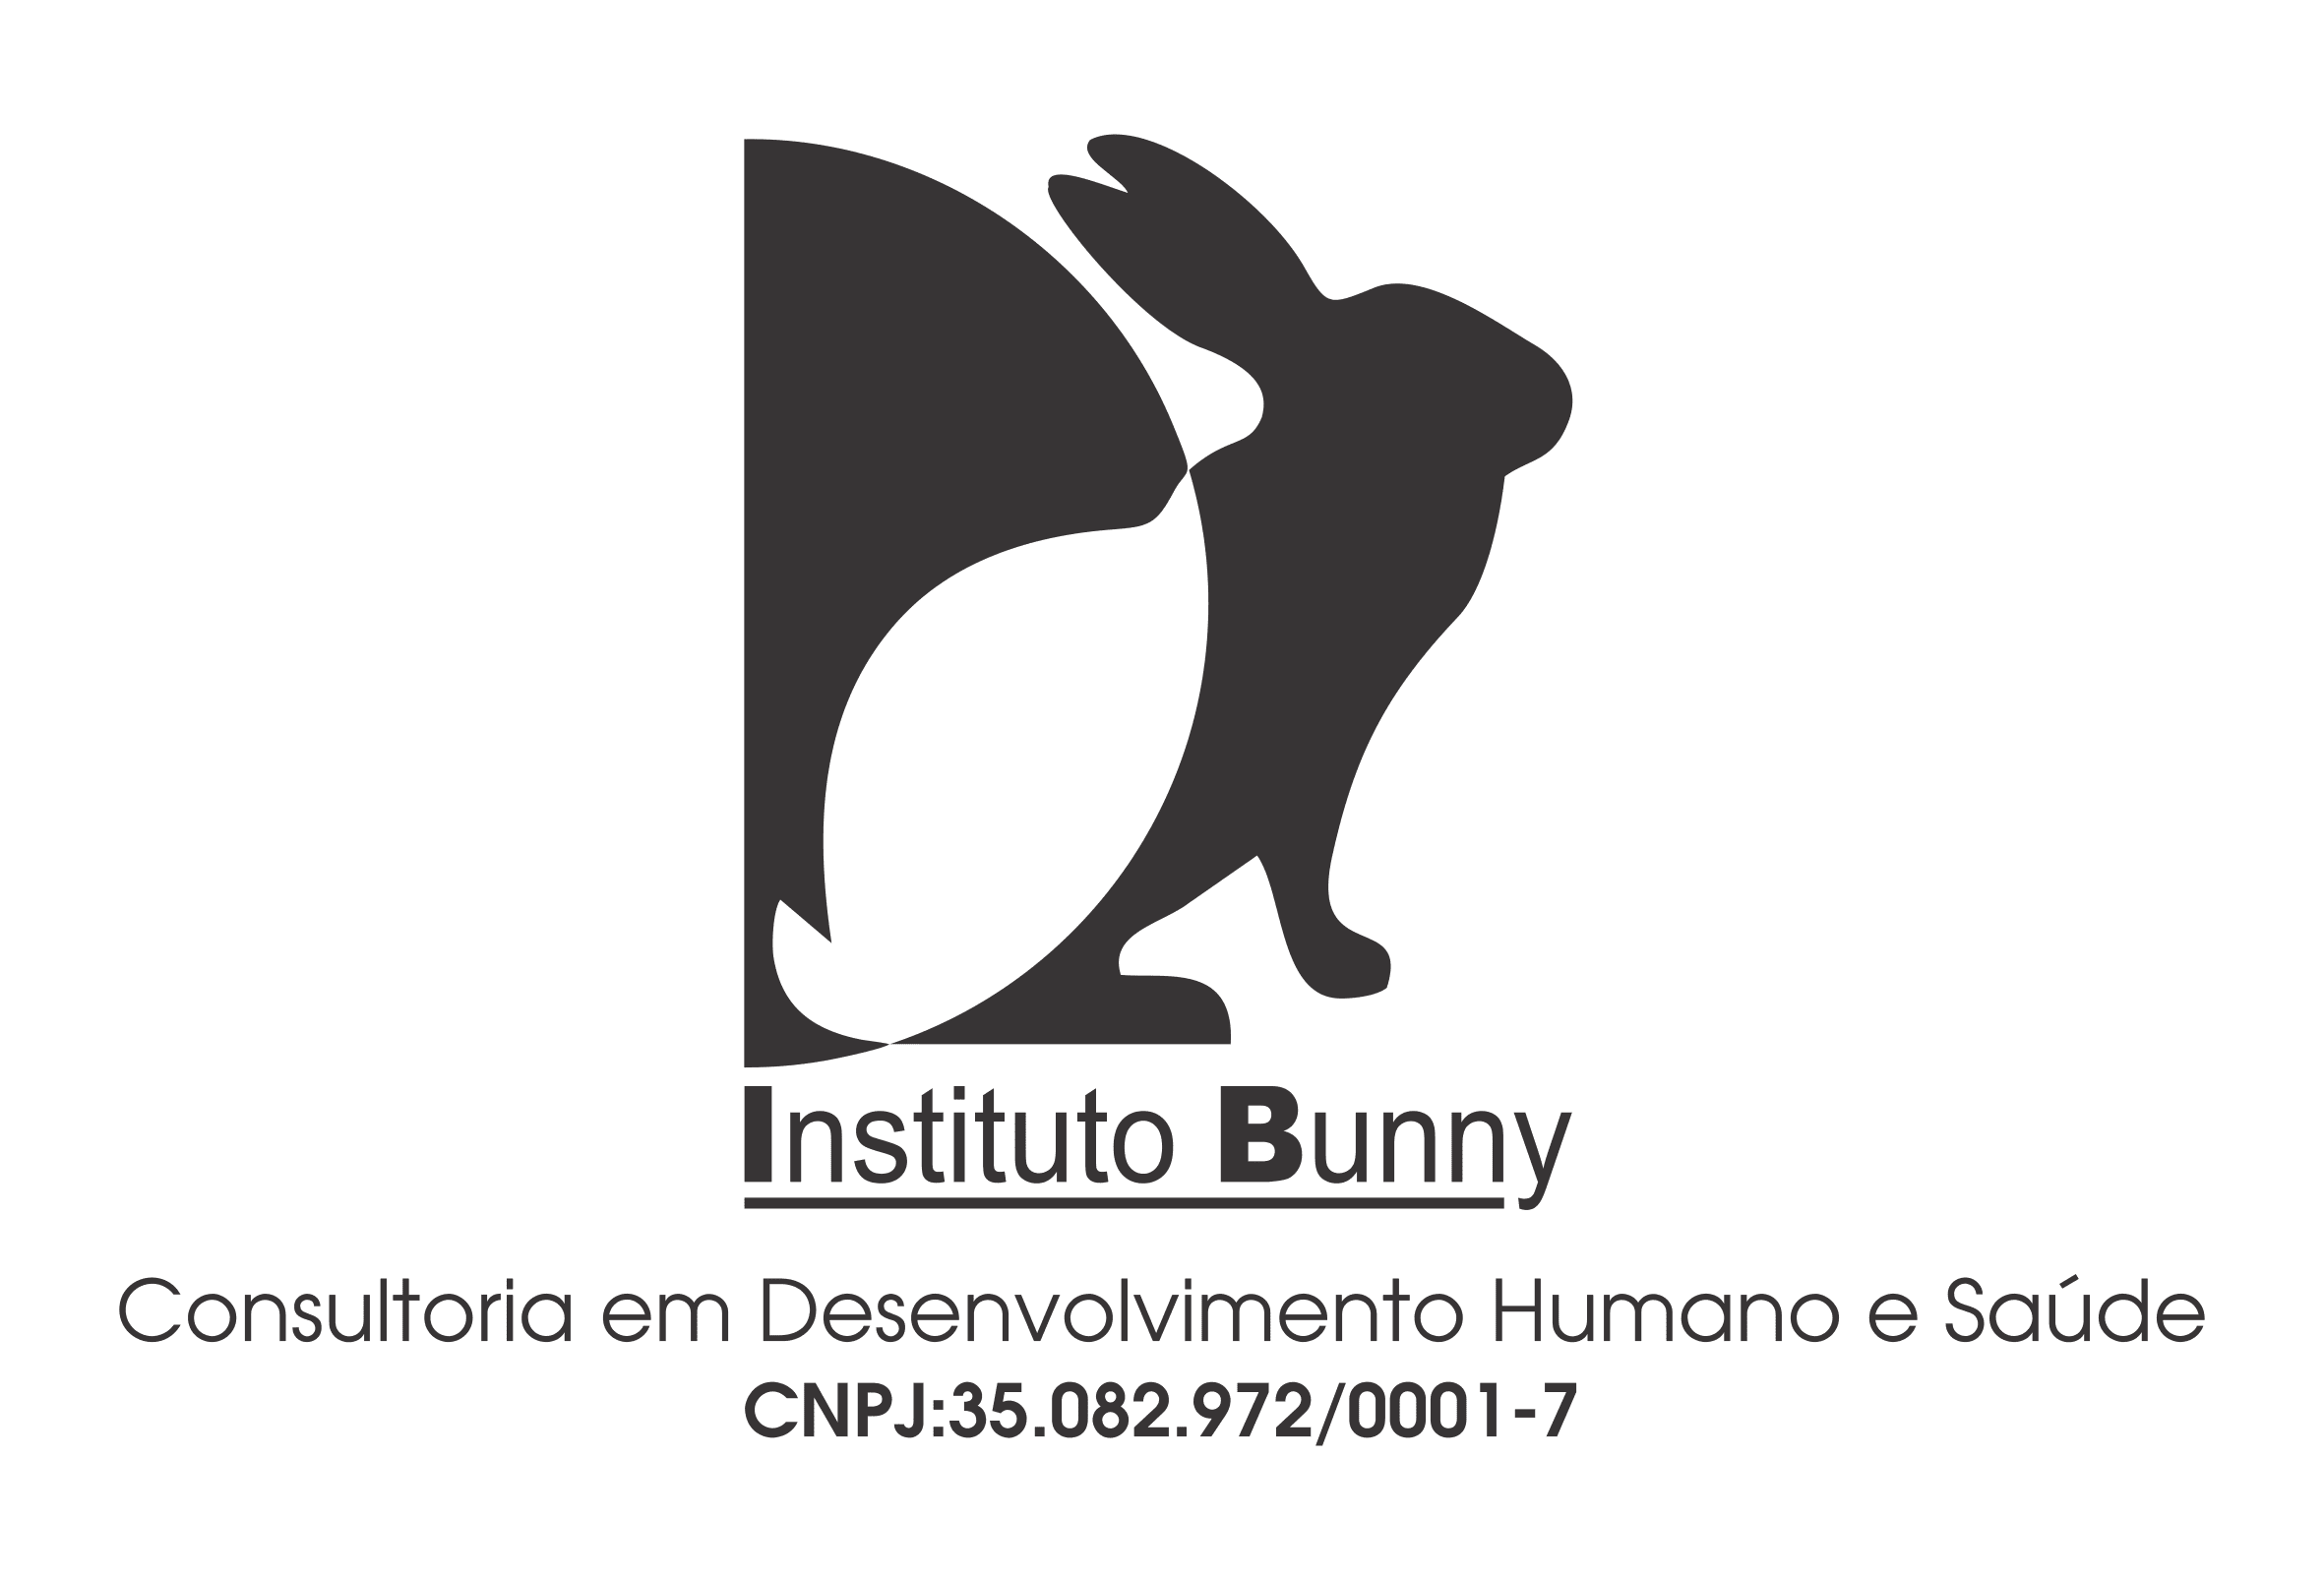 Instituto Bunny